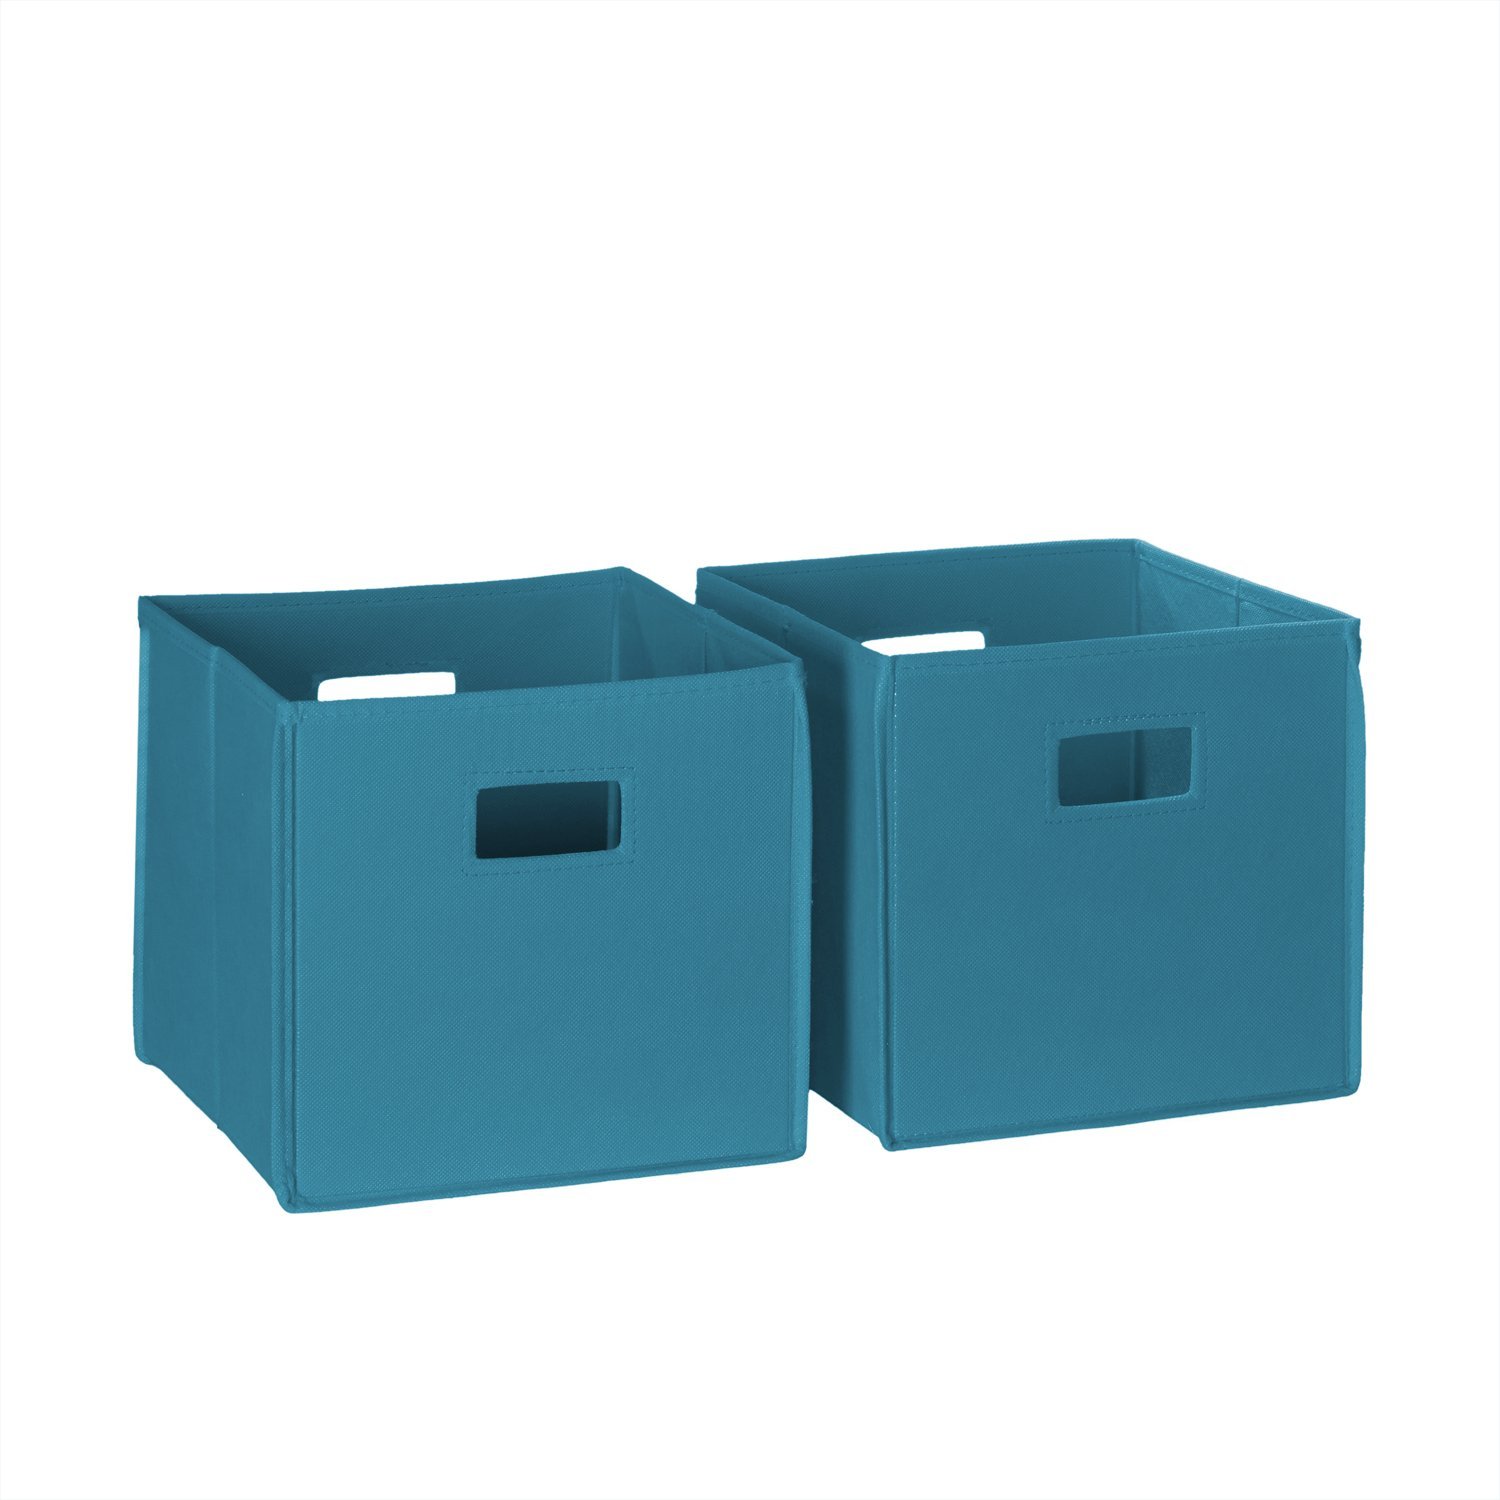 RiverRidge Home Products 2-Piece Folding Storage Bin – Just $9.69!